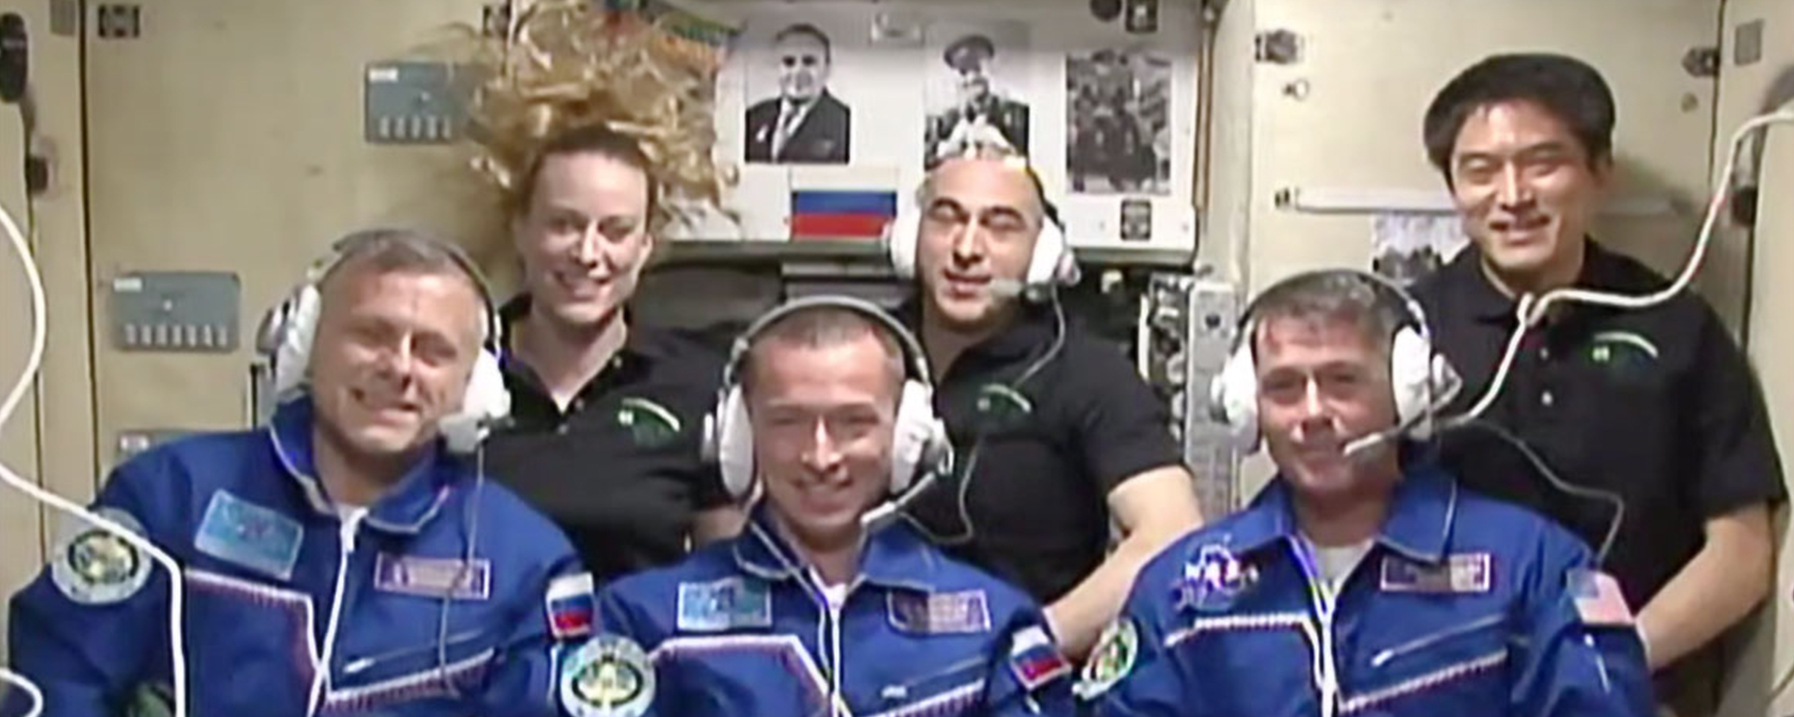 Expedition 49 Crew